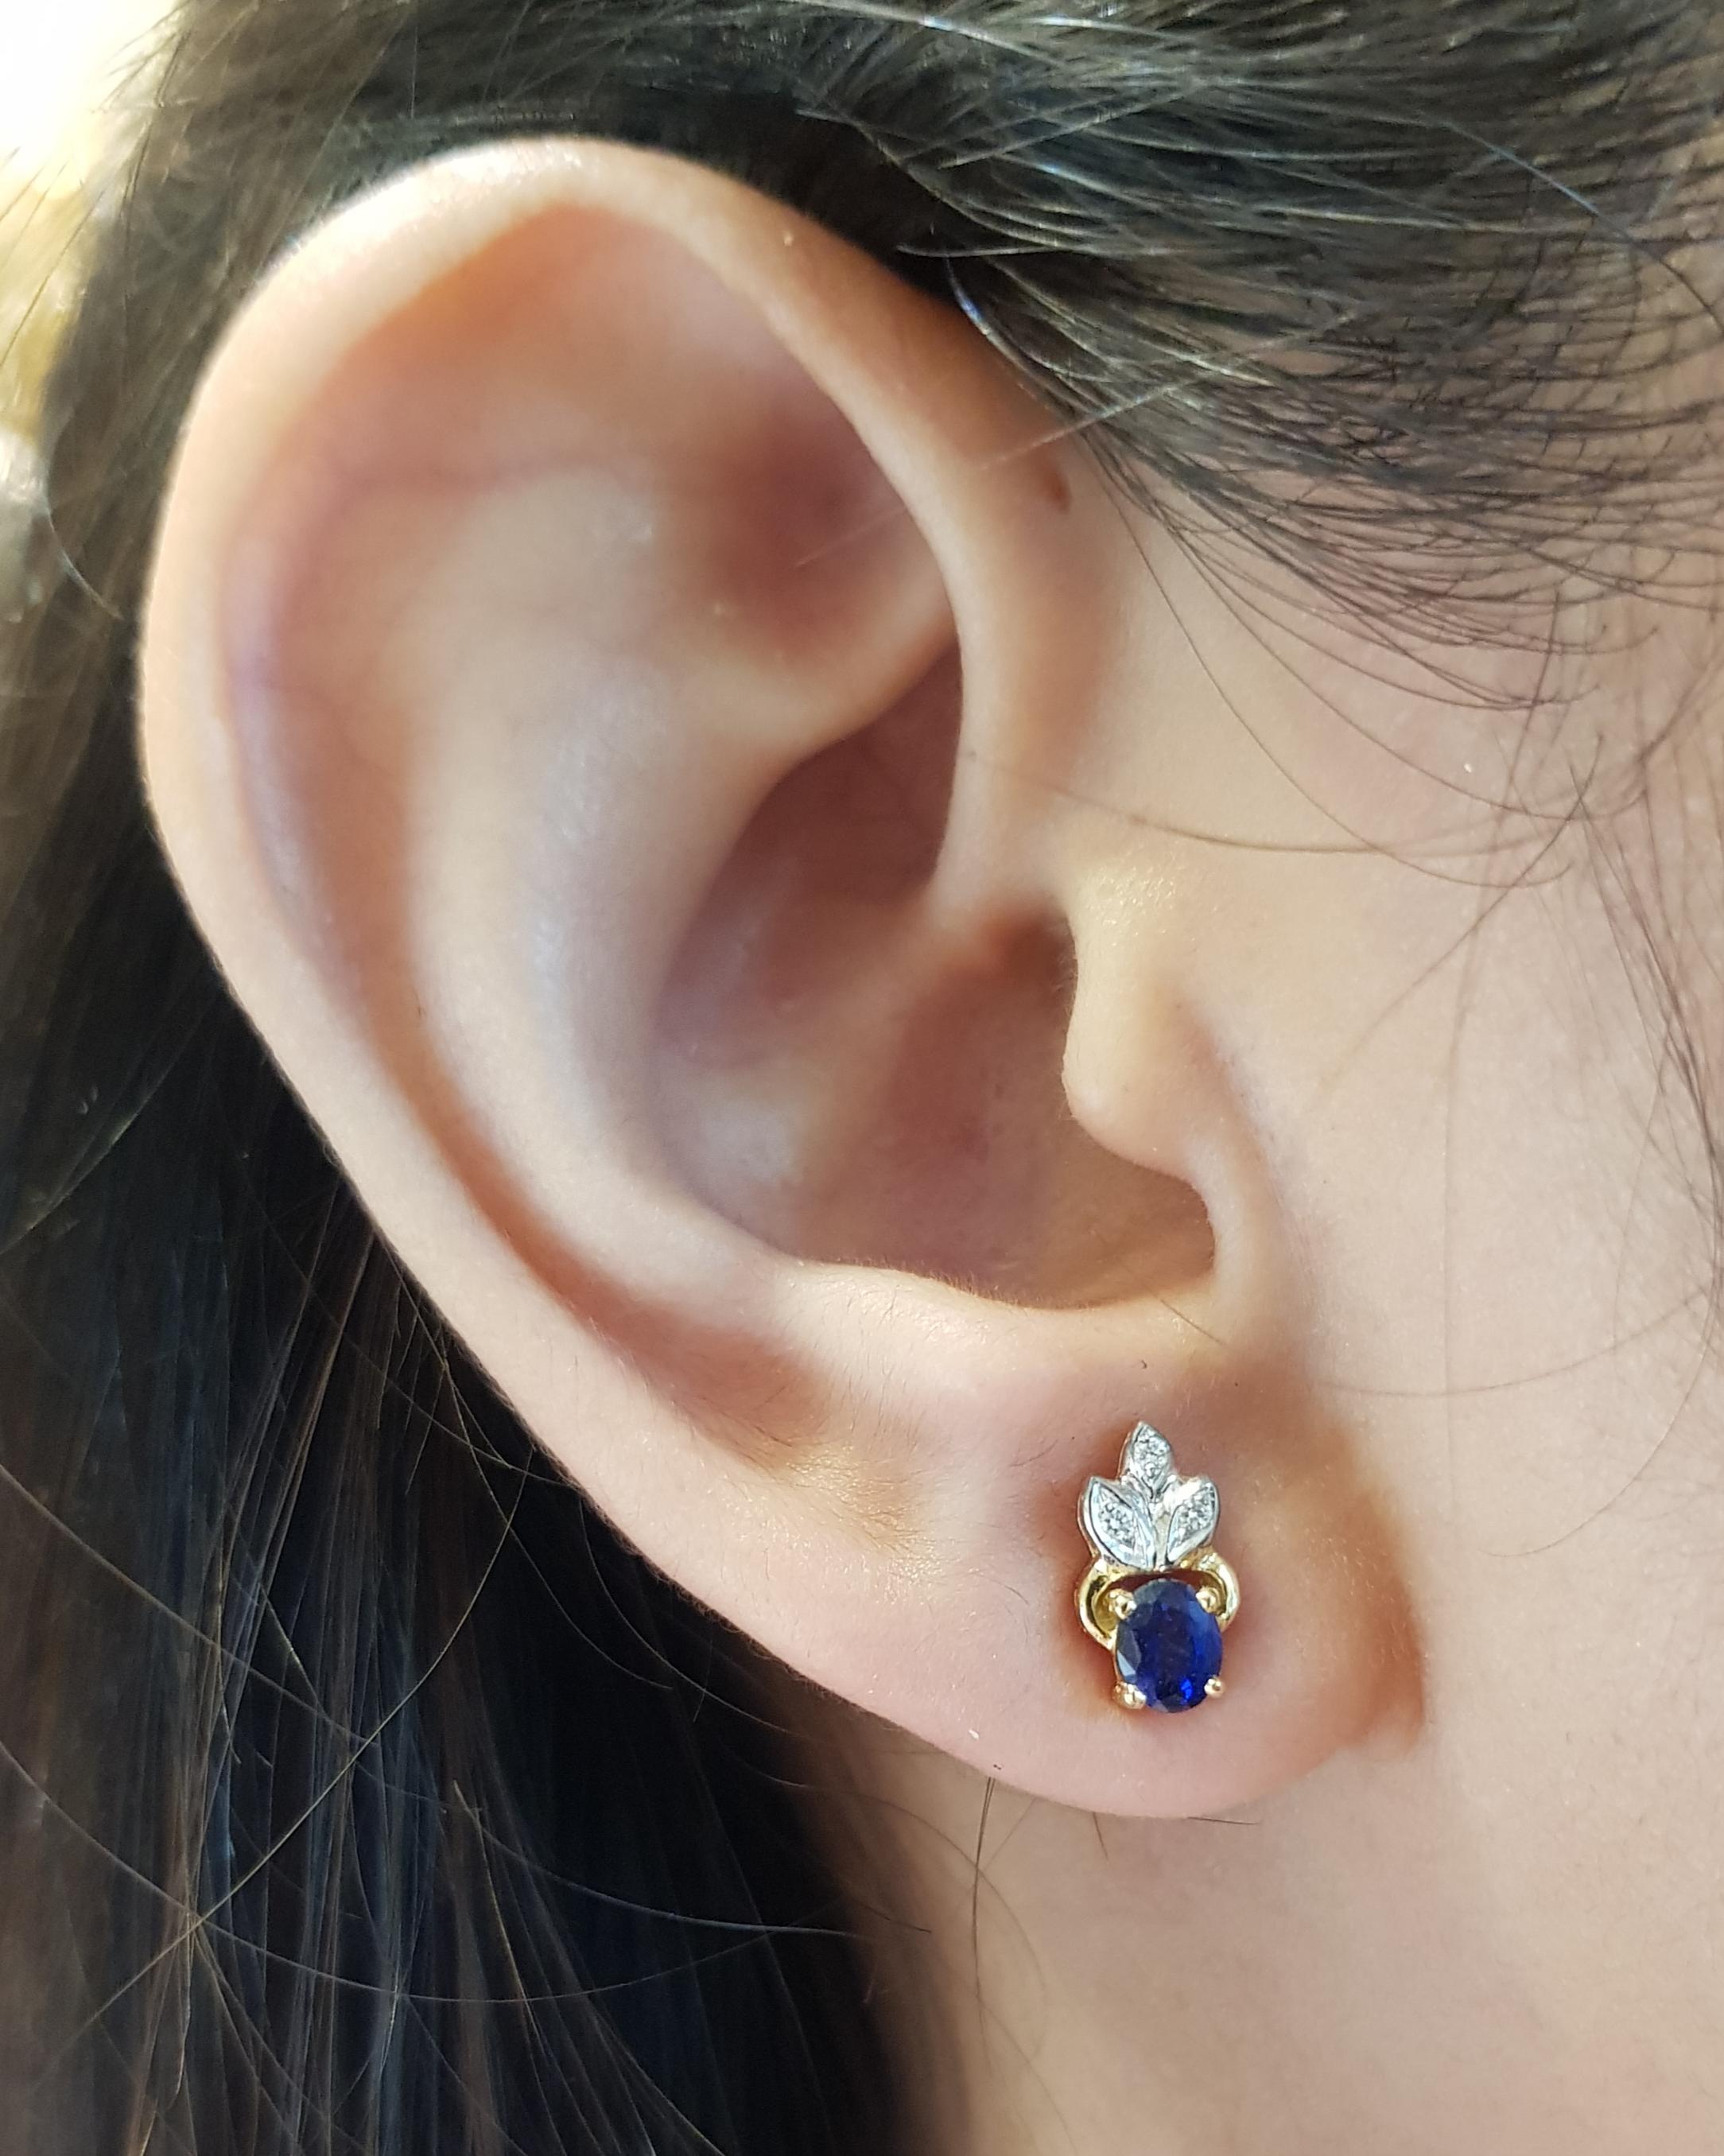 Blue Sapphire 0.65 carat with Diamond 0.04 carat Earrings set in 18 Karat Gold Settings

Width:  0.5 cm 
Length:  1.0 cm
Total Weight: 2.2 grams

